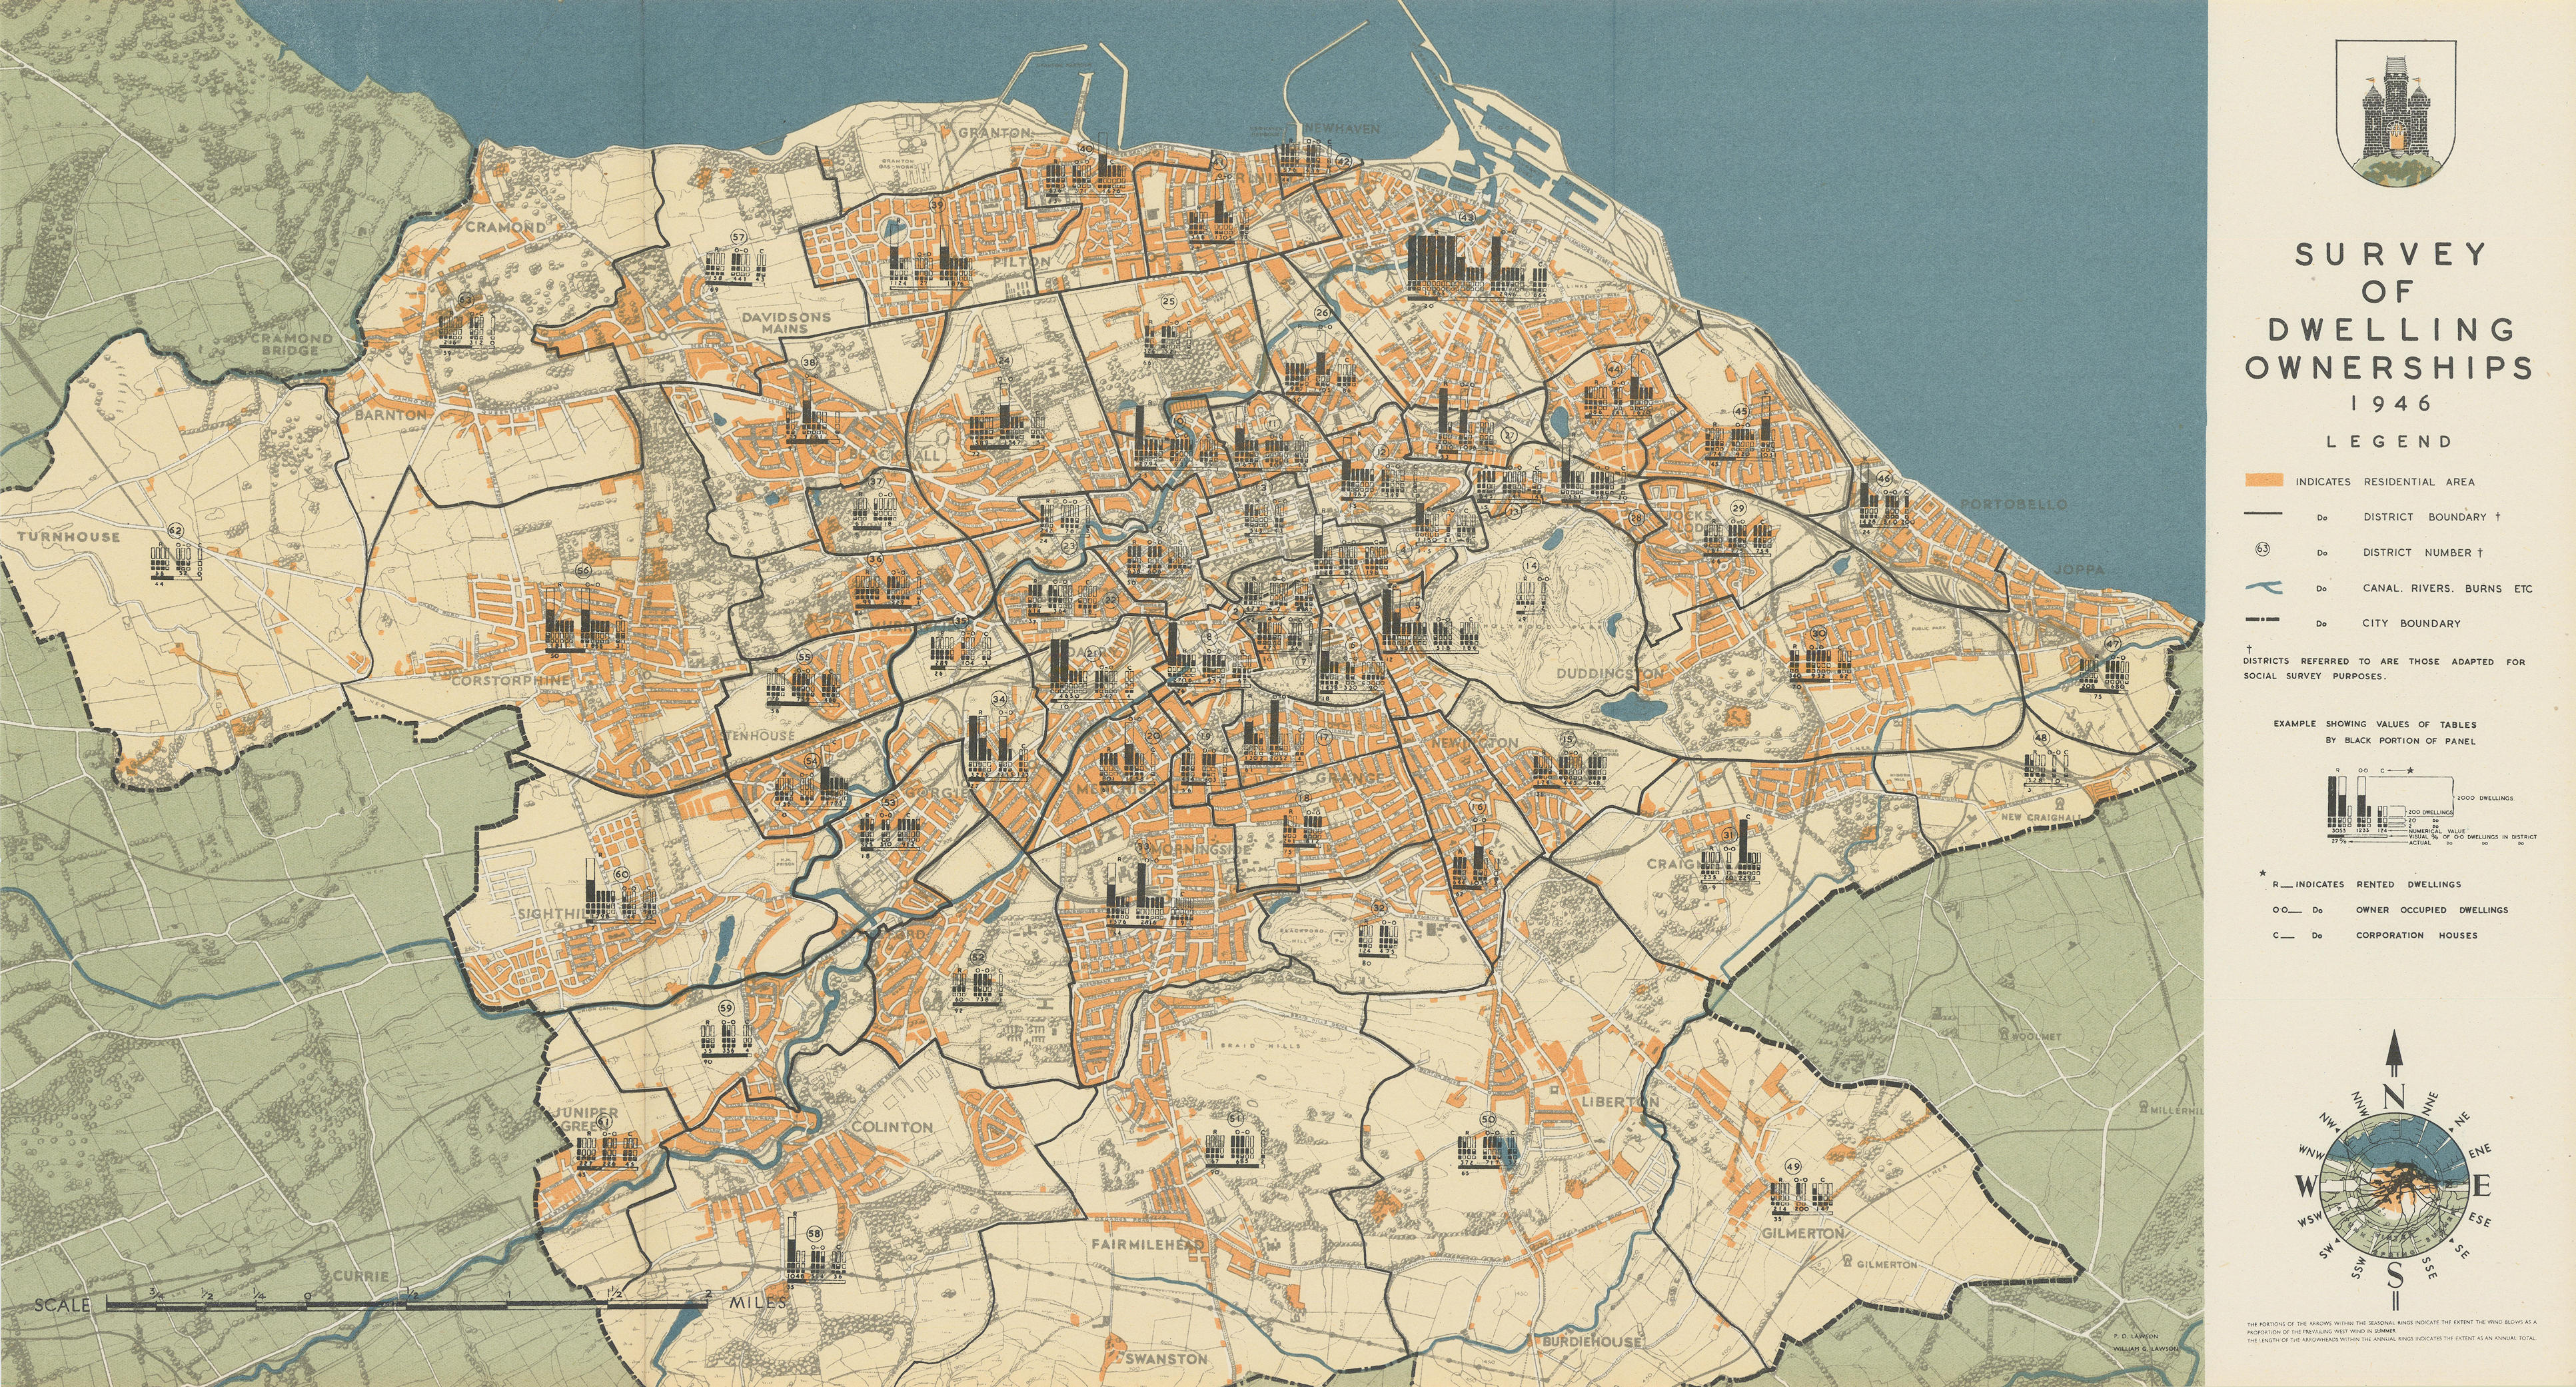 EDINBURGH. Survey of Dwelling Ownerships 1946. PATRICK ABERCROMBIE 1949 map